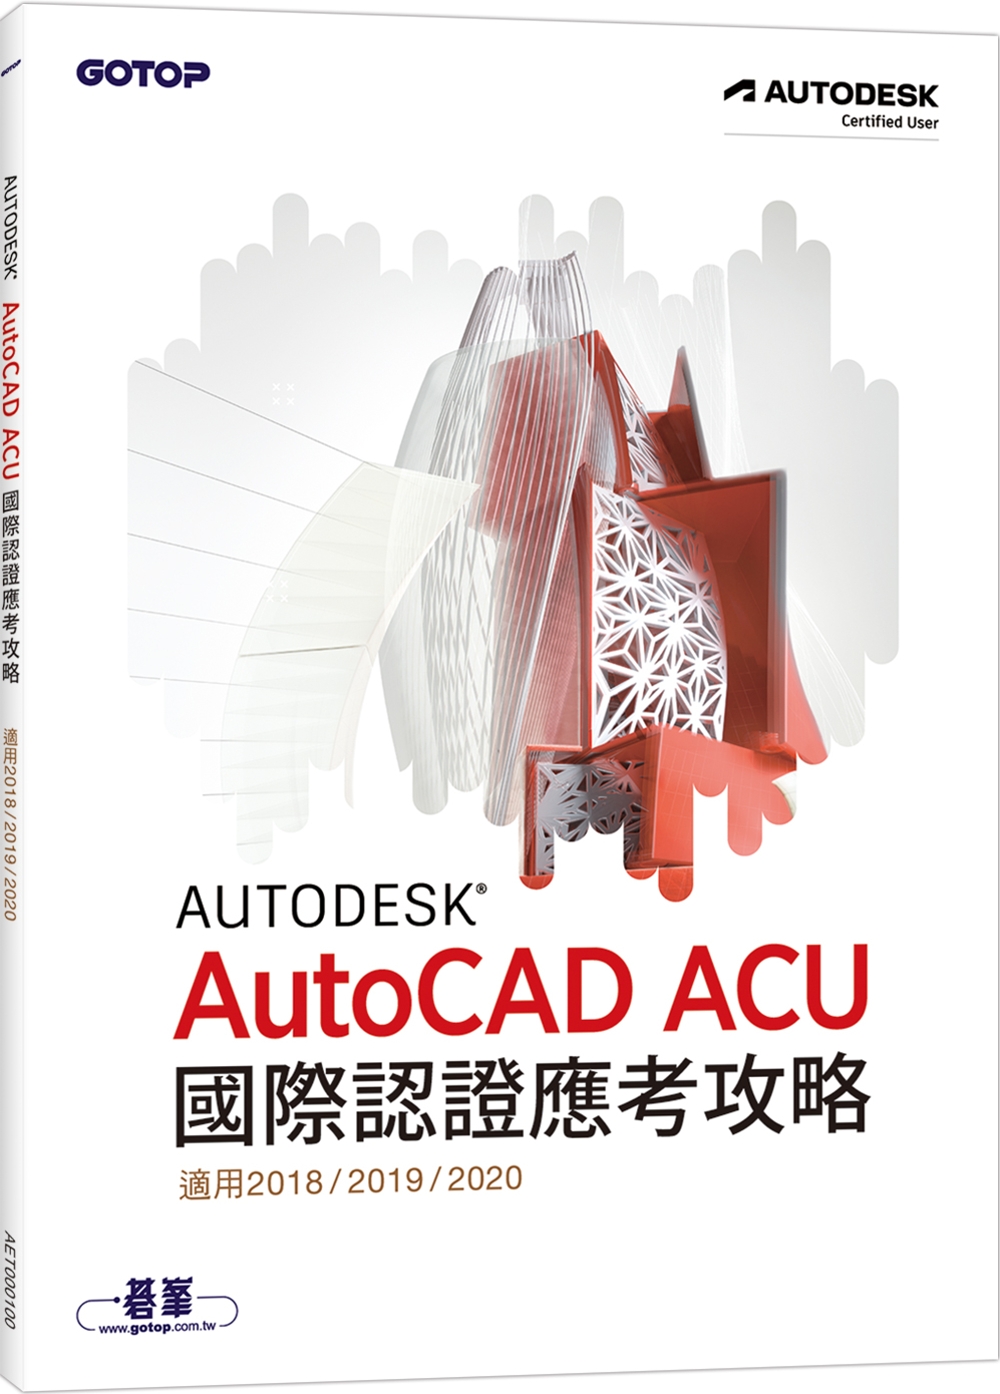 Autodesk AutoCAD ACU 國際認證應考攻略 ...